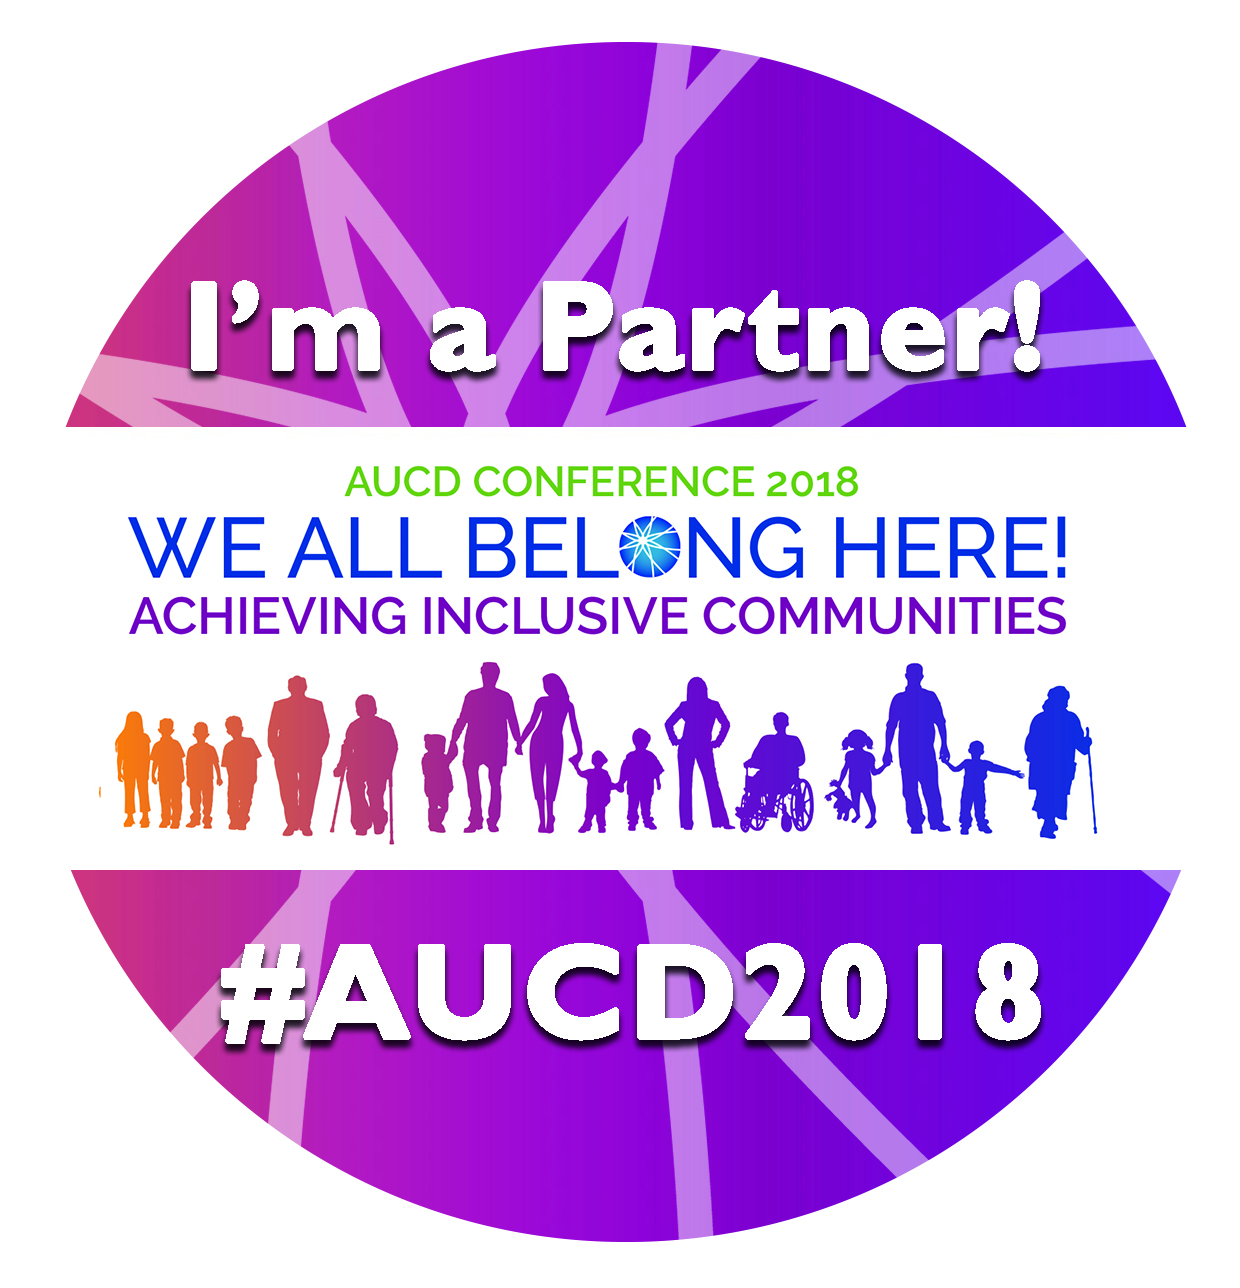 Round purple button says I'm a Partner AUCD 2018